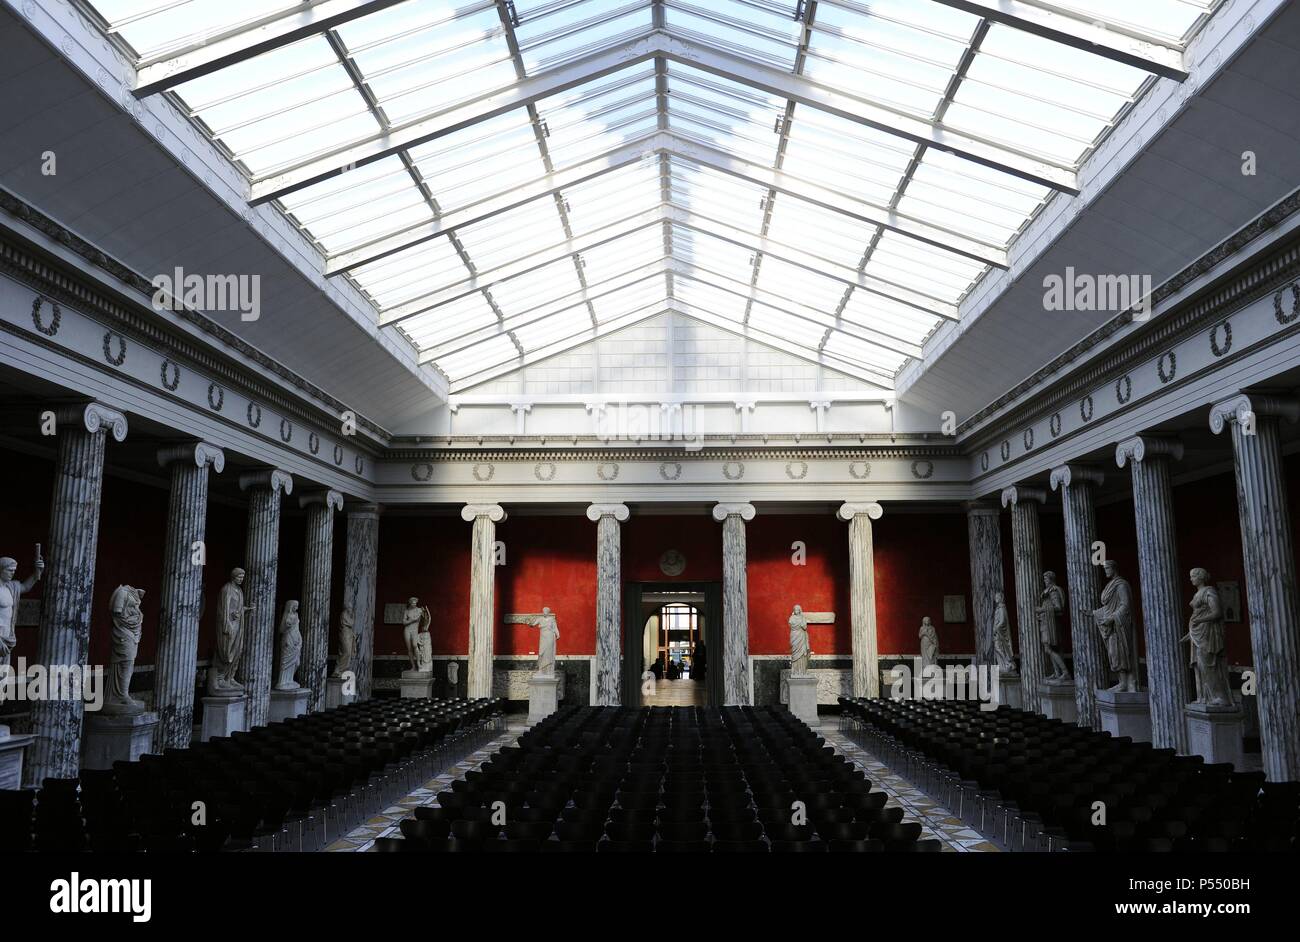 Denmark. Copenhagen. Ny Carlsberg Glyptotek. Hall. Interior. Stock Photo